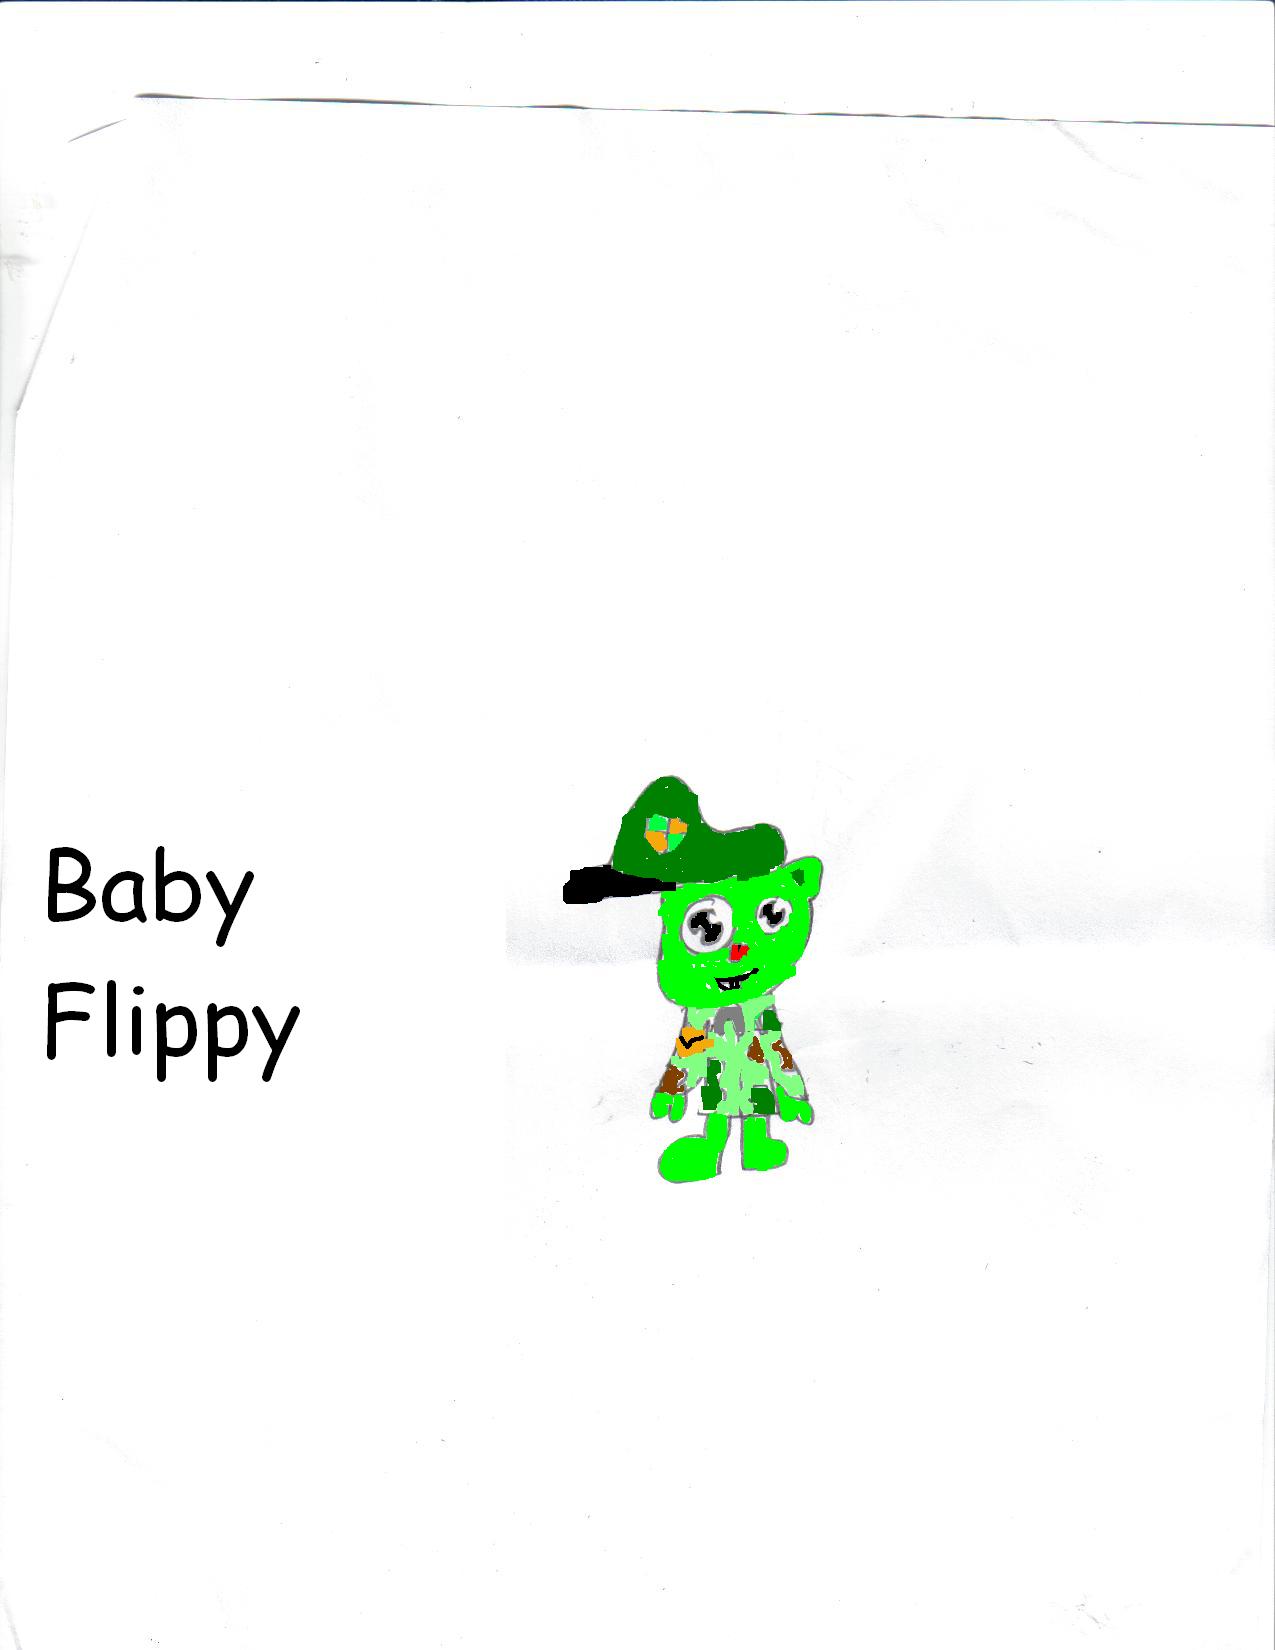 Baby Flippy by ardamess